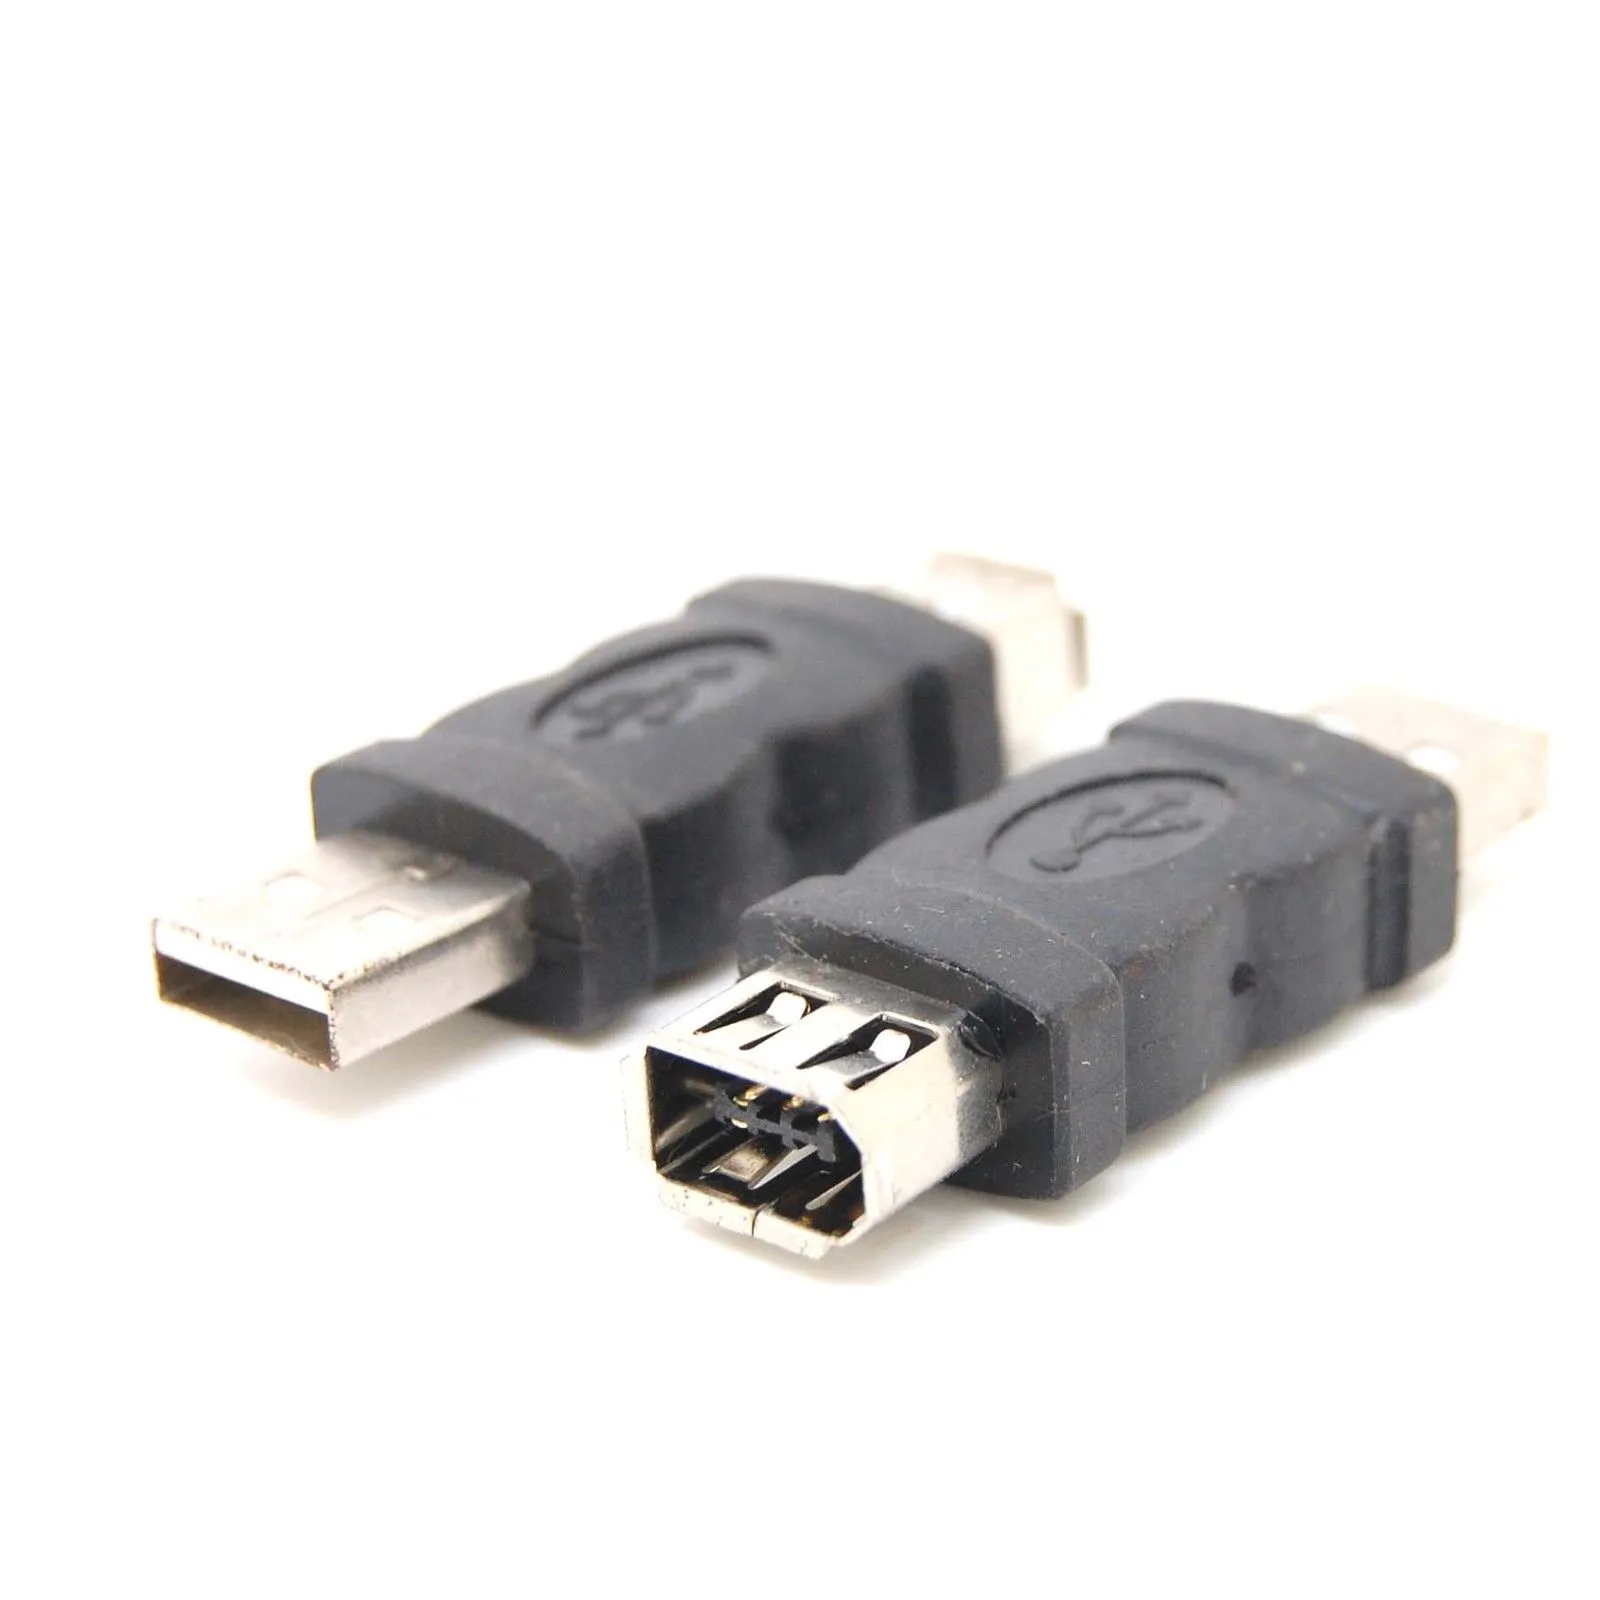 FastSun Firewire IEEE 1394 6 Pin Female to USB Male Adaptor Convertor 2PCS 